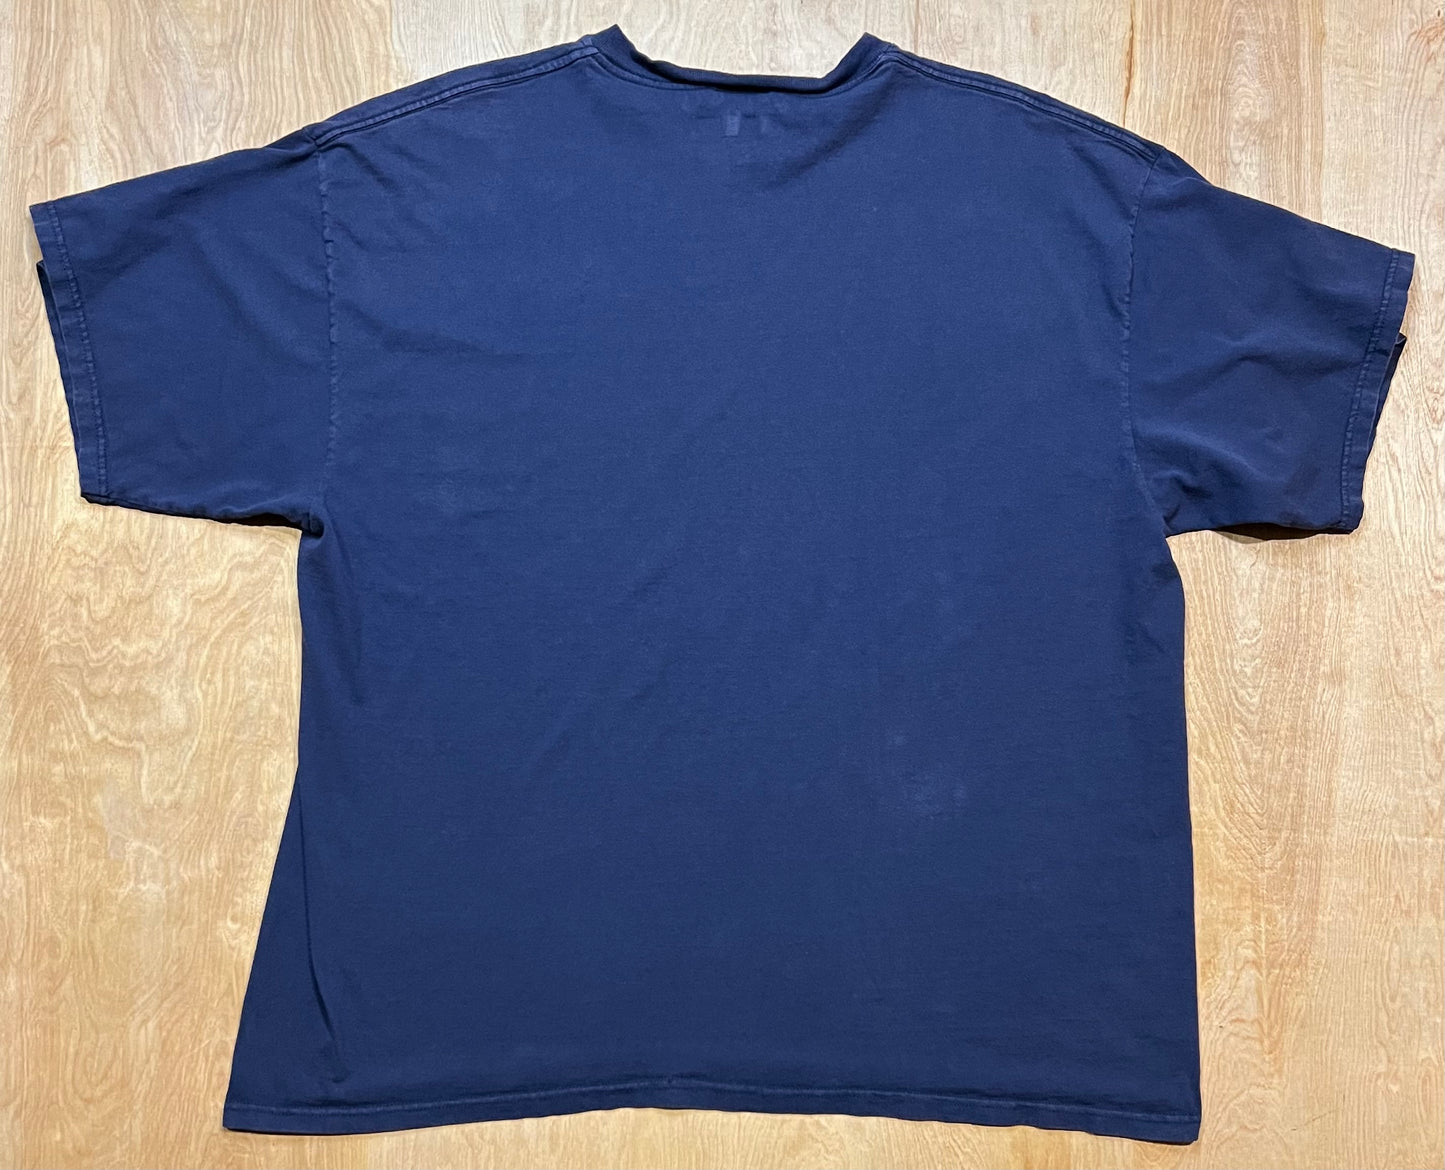 90's Nike Big Swoosh T-Shirt